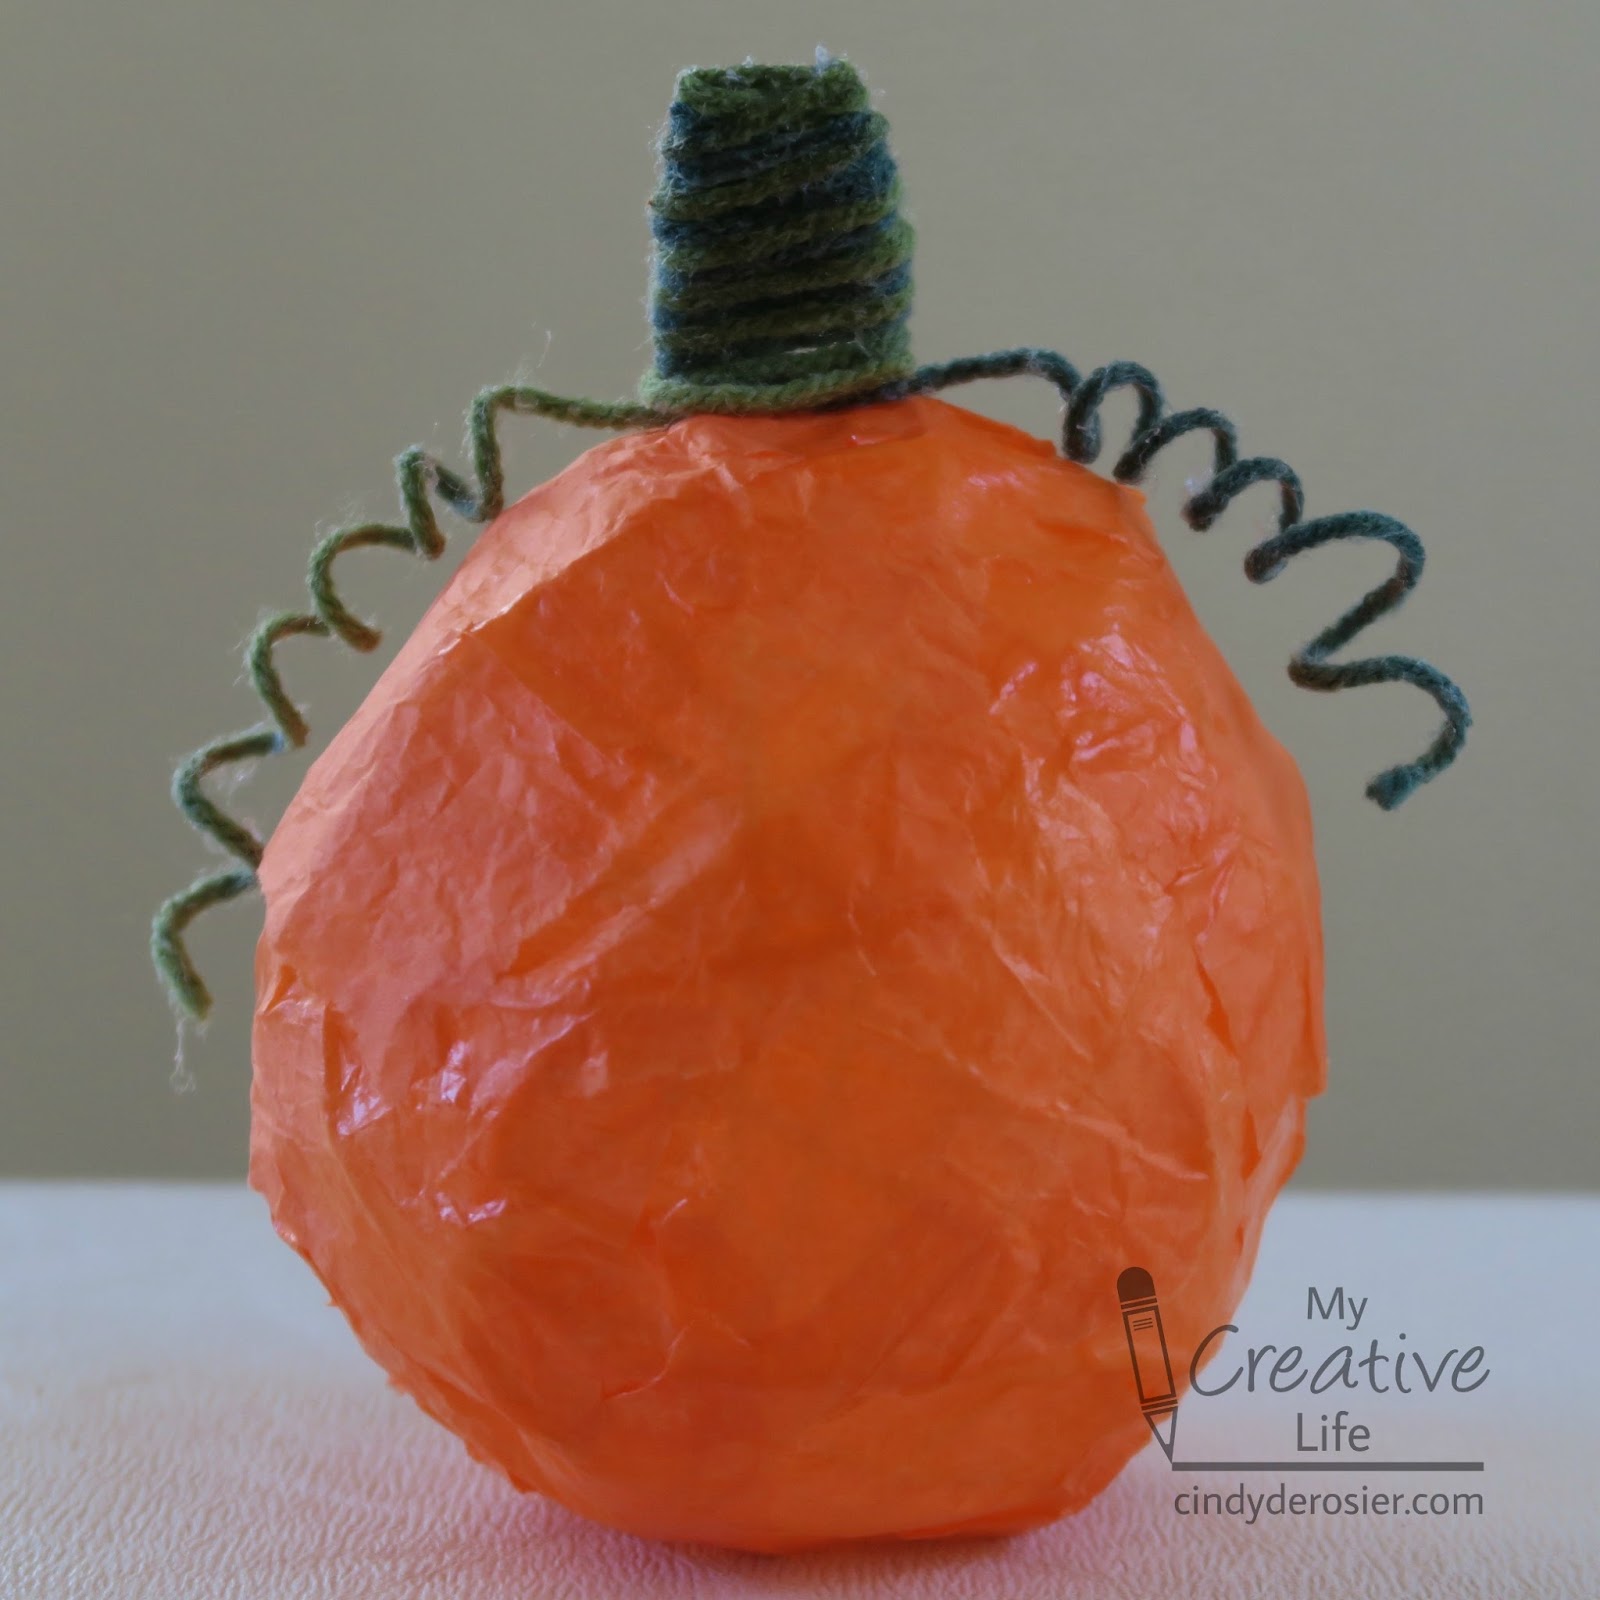 Cindy deRosier: My Creative Life: Toothy Pumpkins